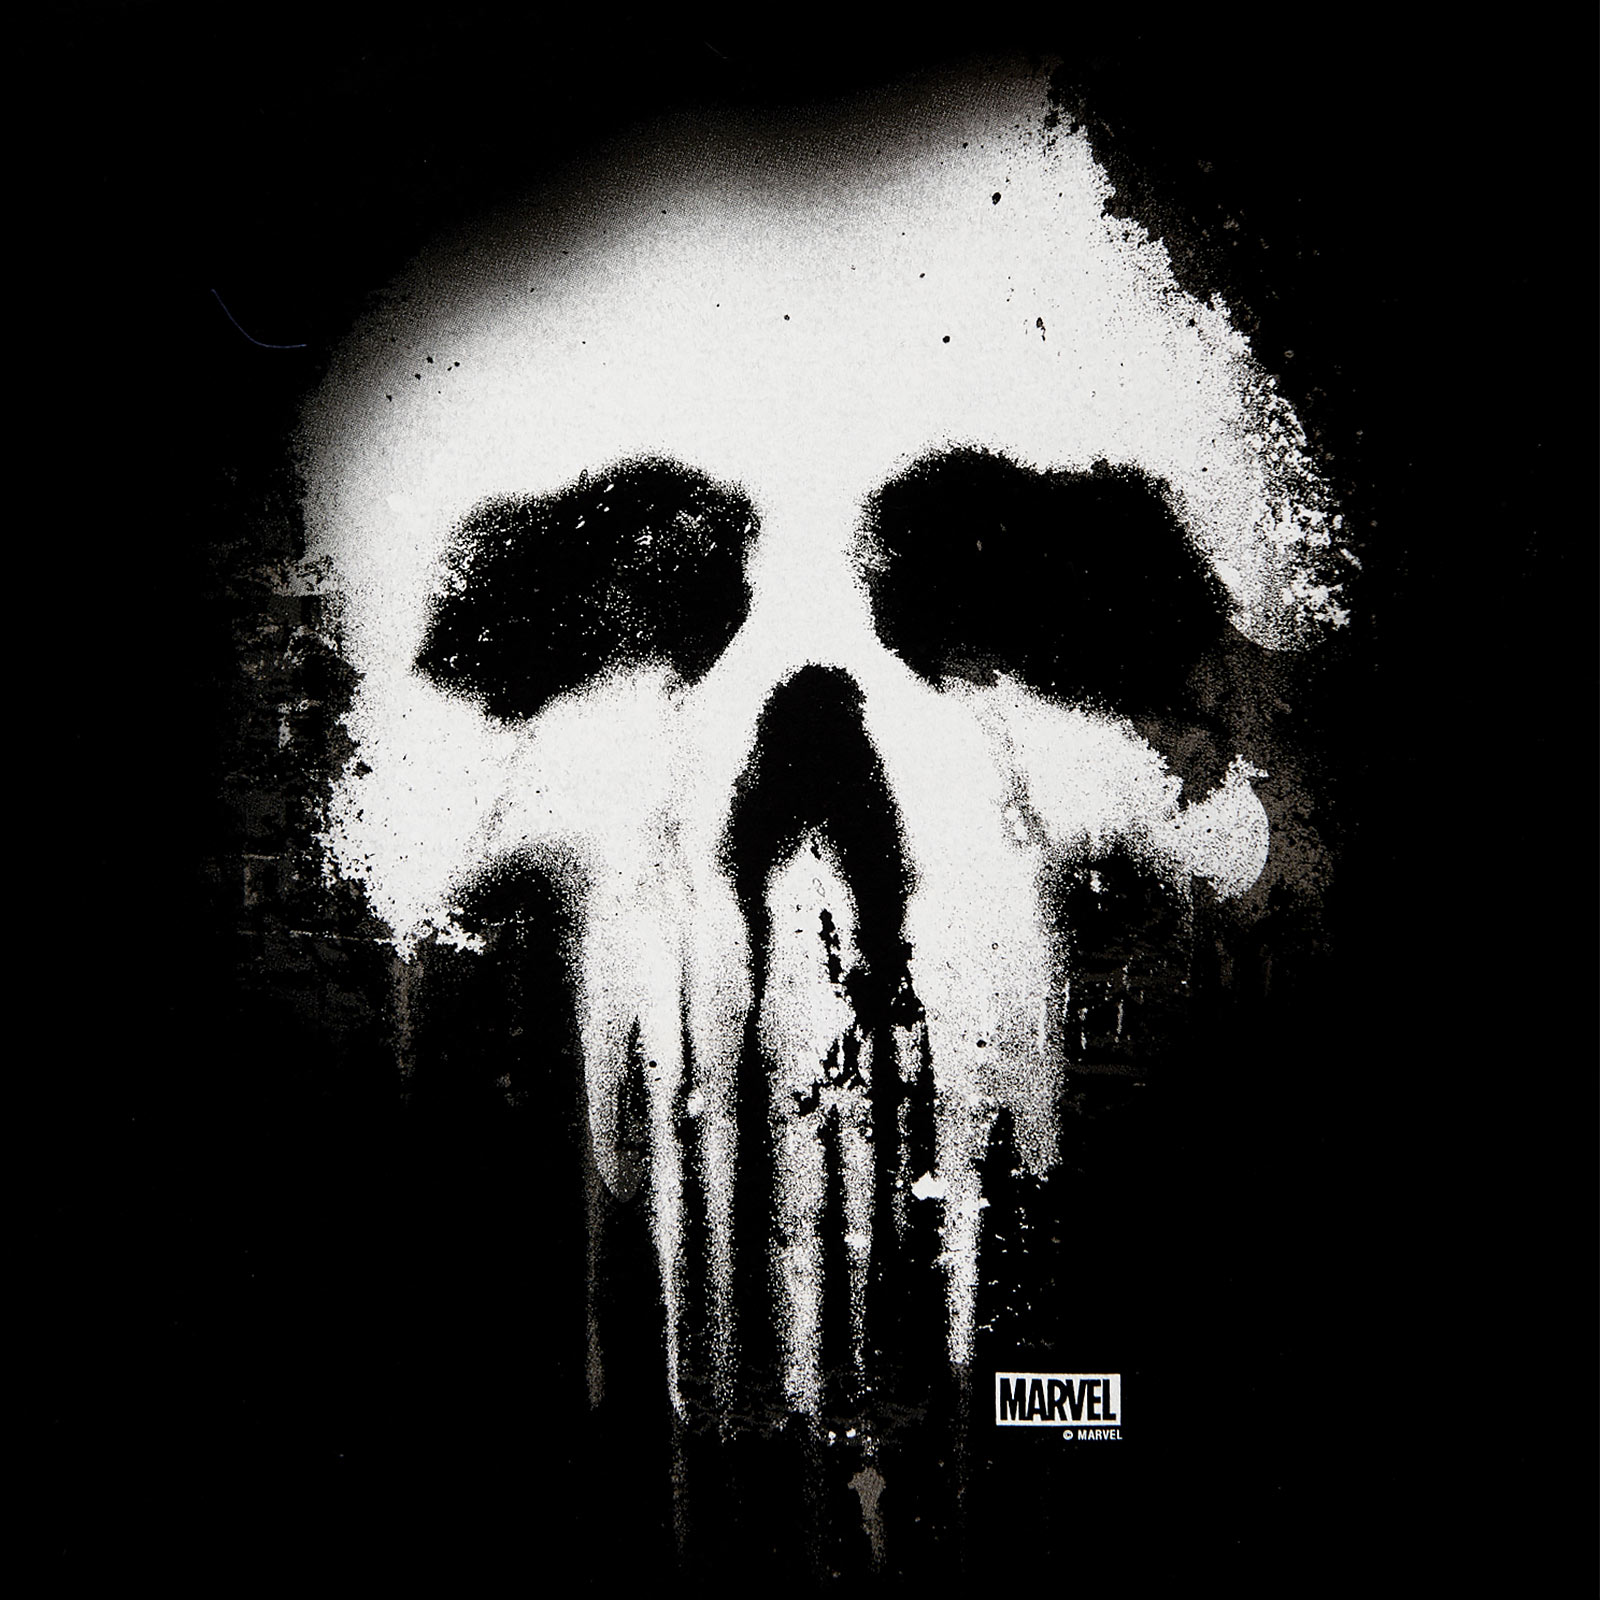 Punisher - Faded Skull Logo T-Shirt schwarz